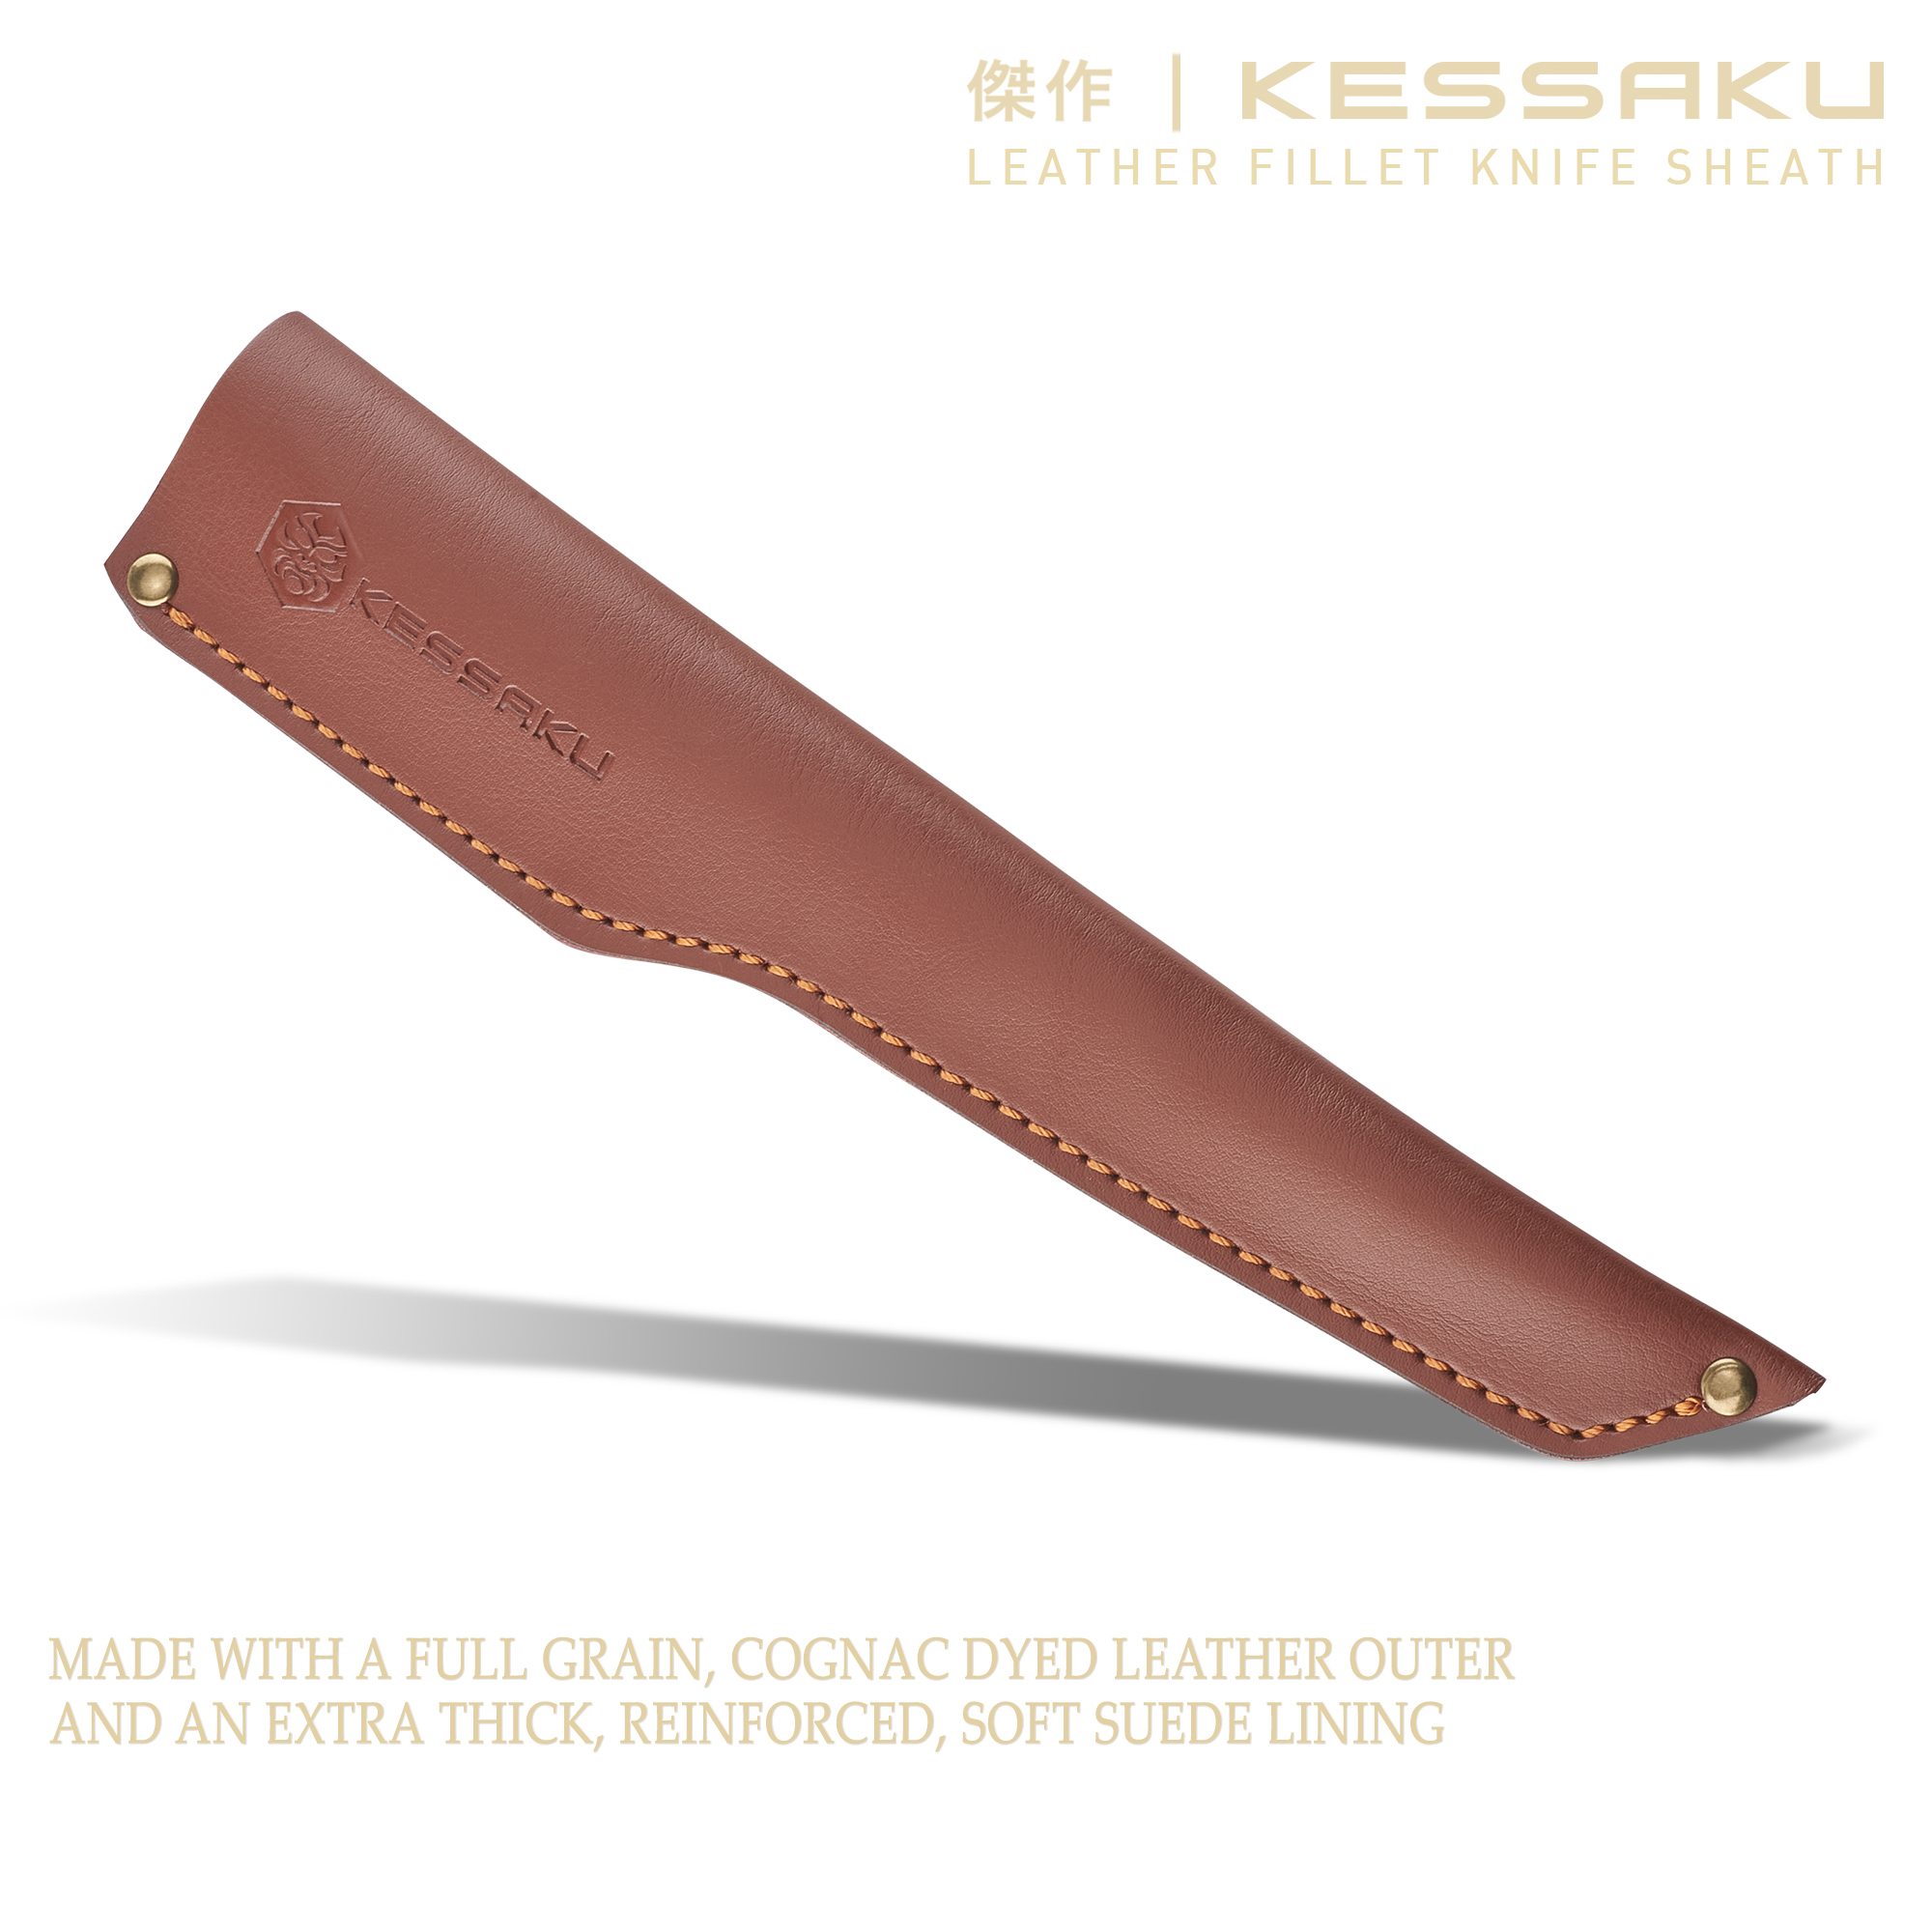 Kessaku Fillet Knife and Leather Sheath with Belt Loop - 7 inch - Damascus Dynasty Series - AUS-10V Steel - G10 Garolite Handle